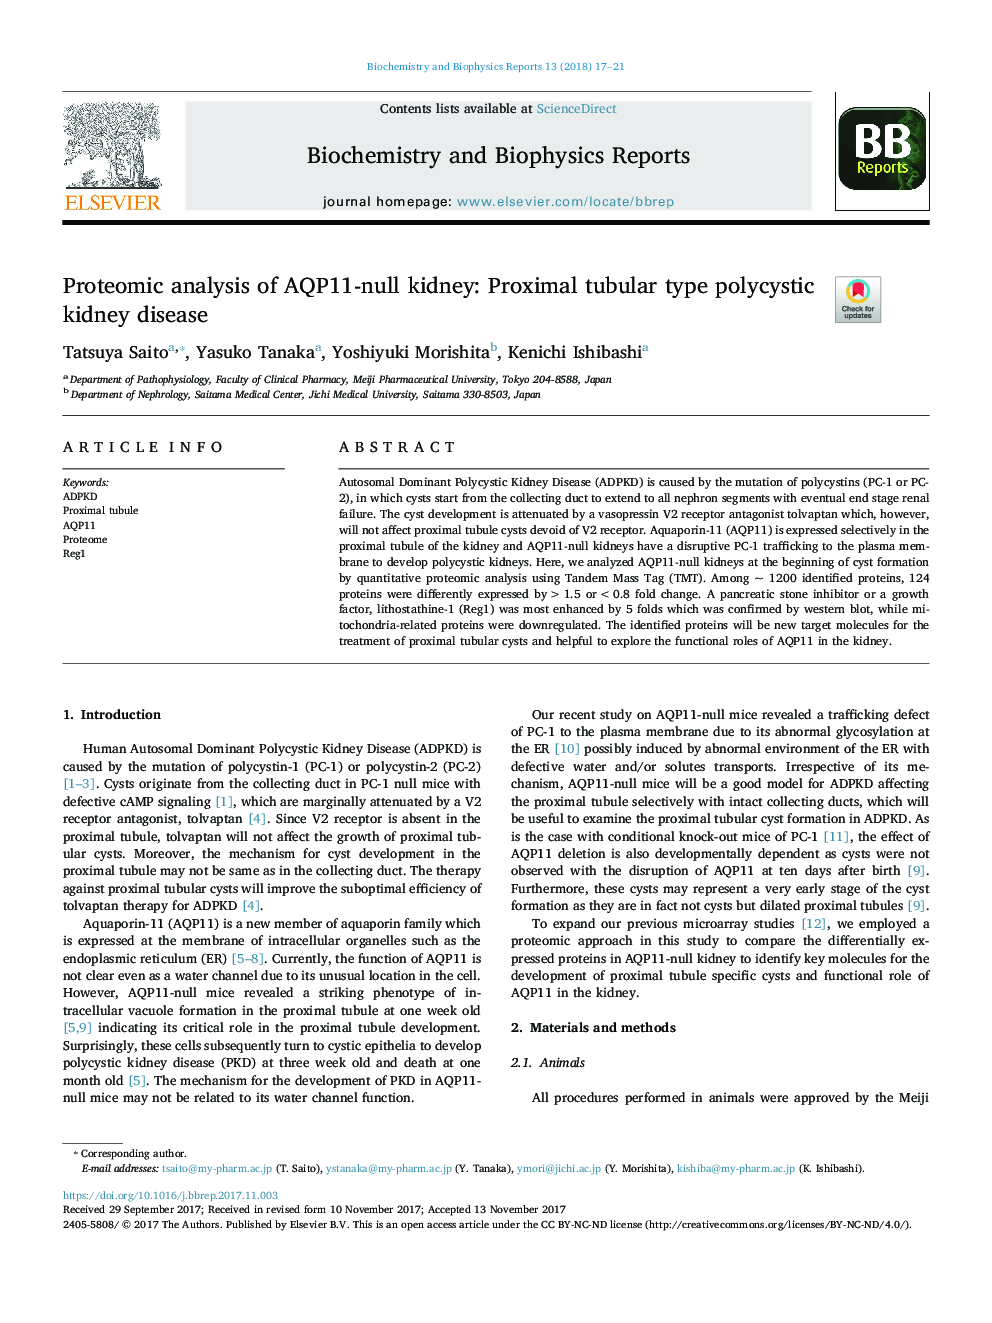 Proteomic analysis of AQP11-null kidney: Proximal tubular type polycystic kidney disease